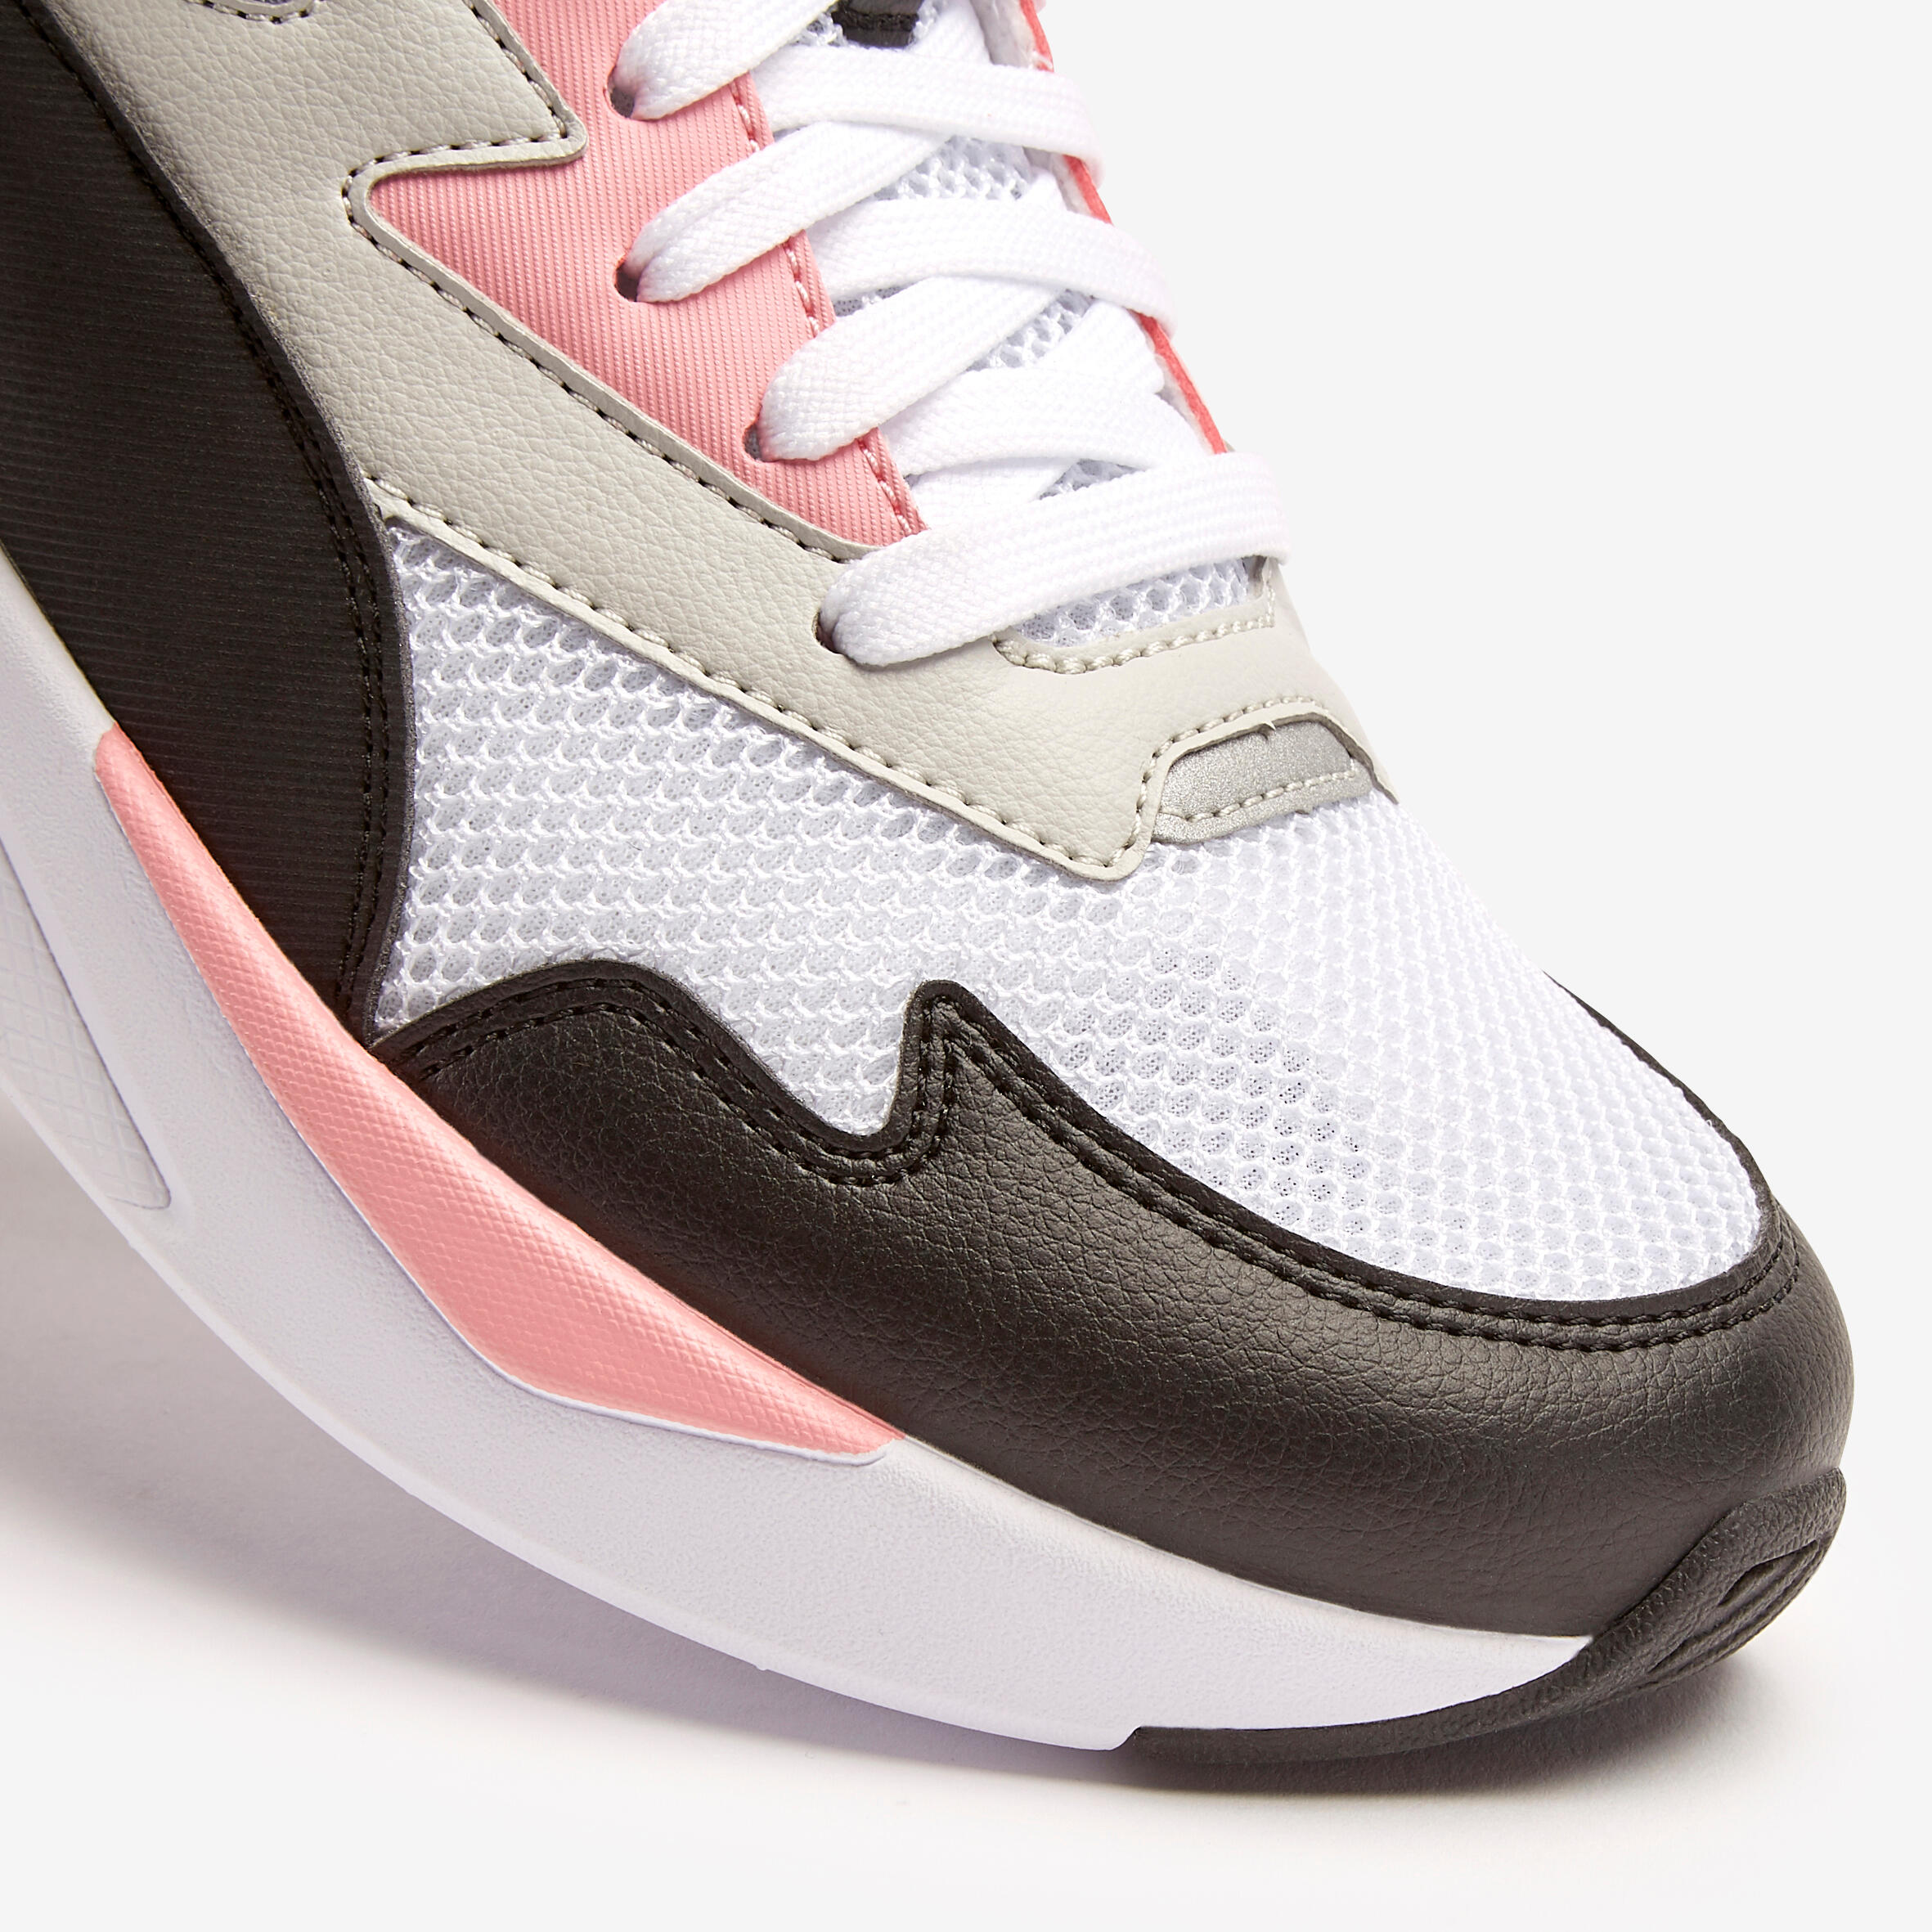 X-RAY urban walking shoes white/black/pink 3/6